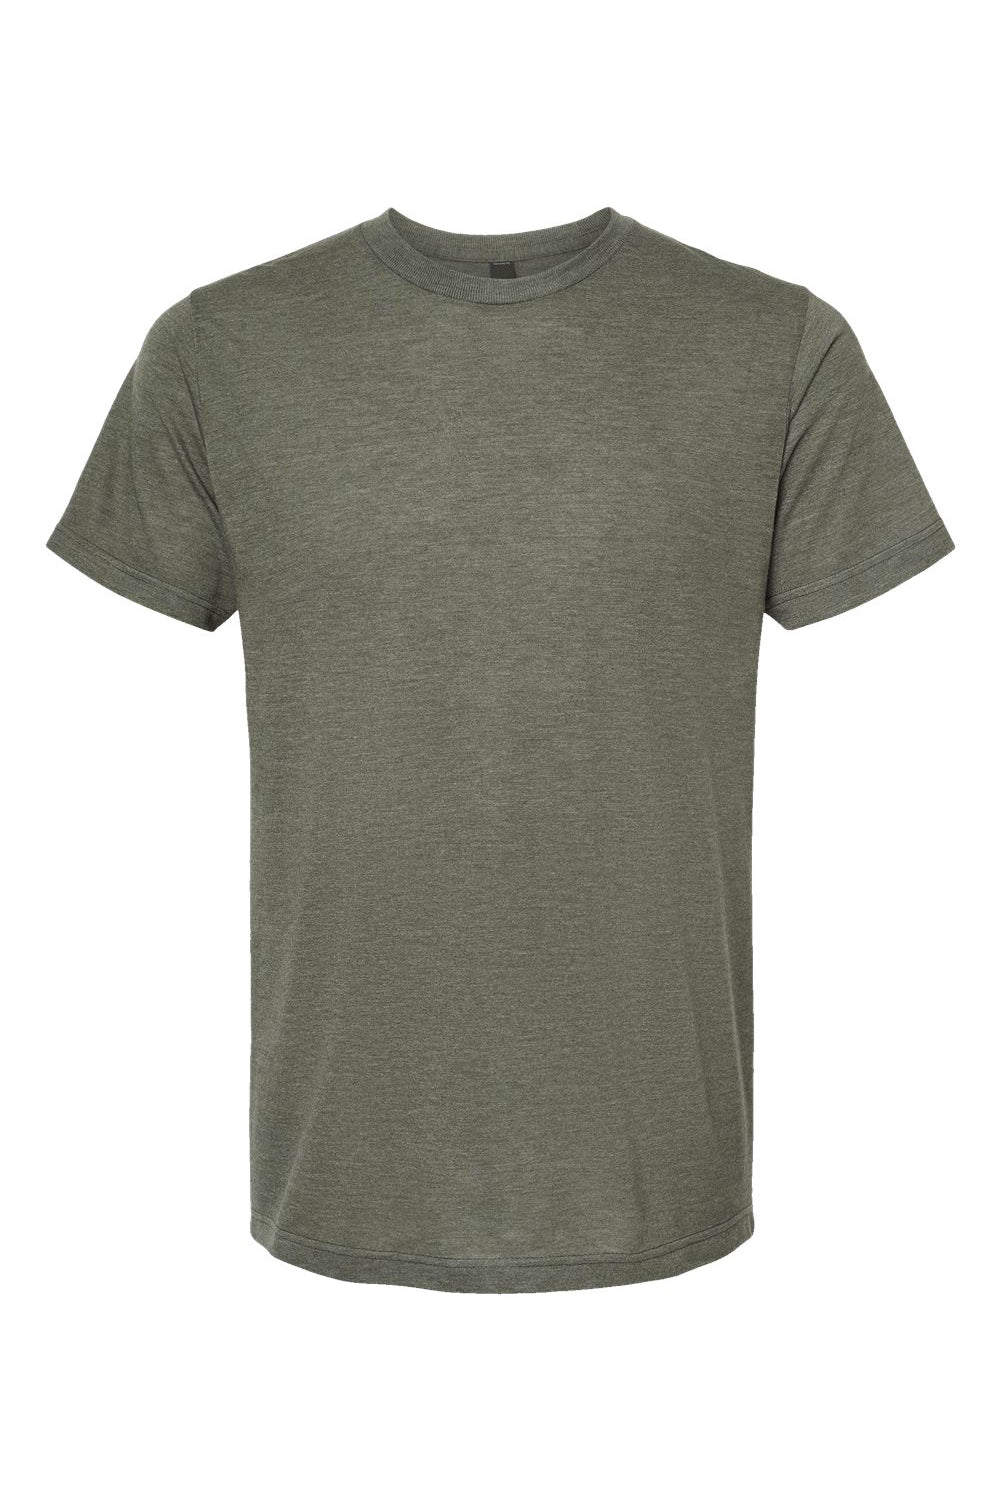 Tultex 254 Mens Short Sleeve Crewneck T-Shirt Military Green Flat Front